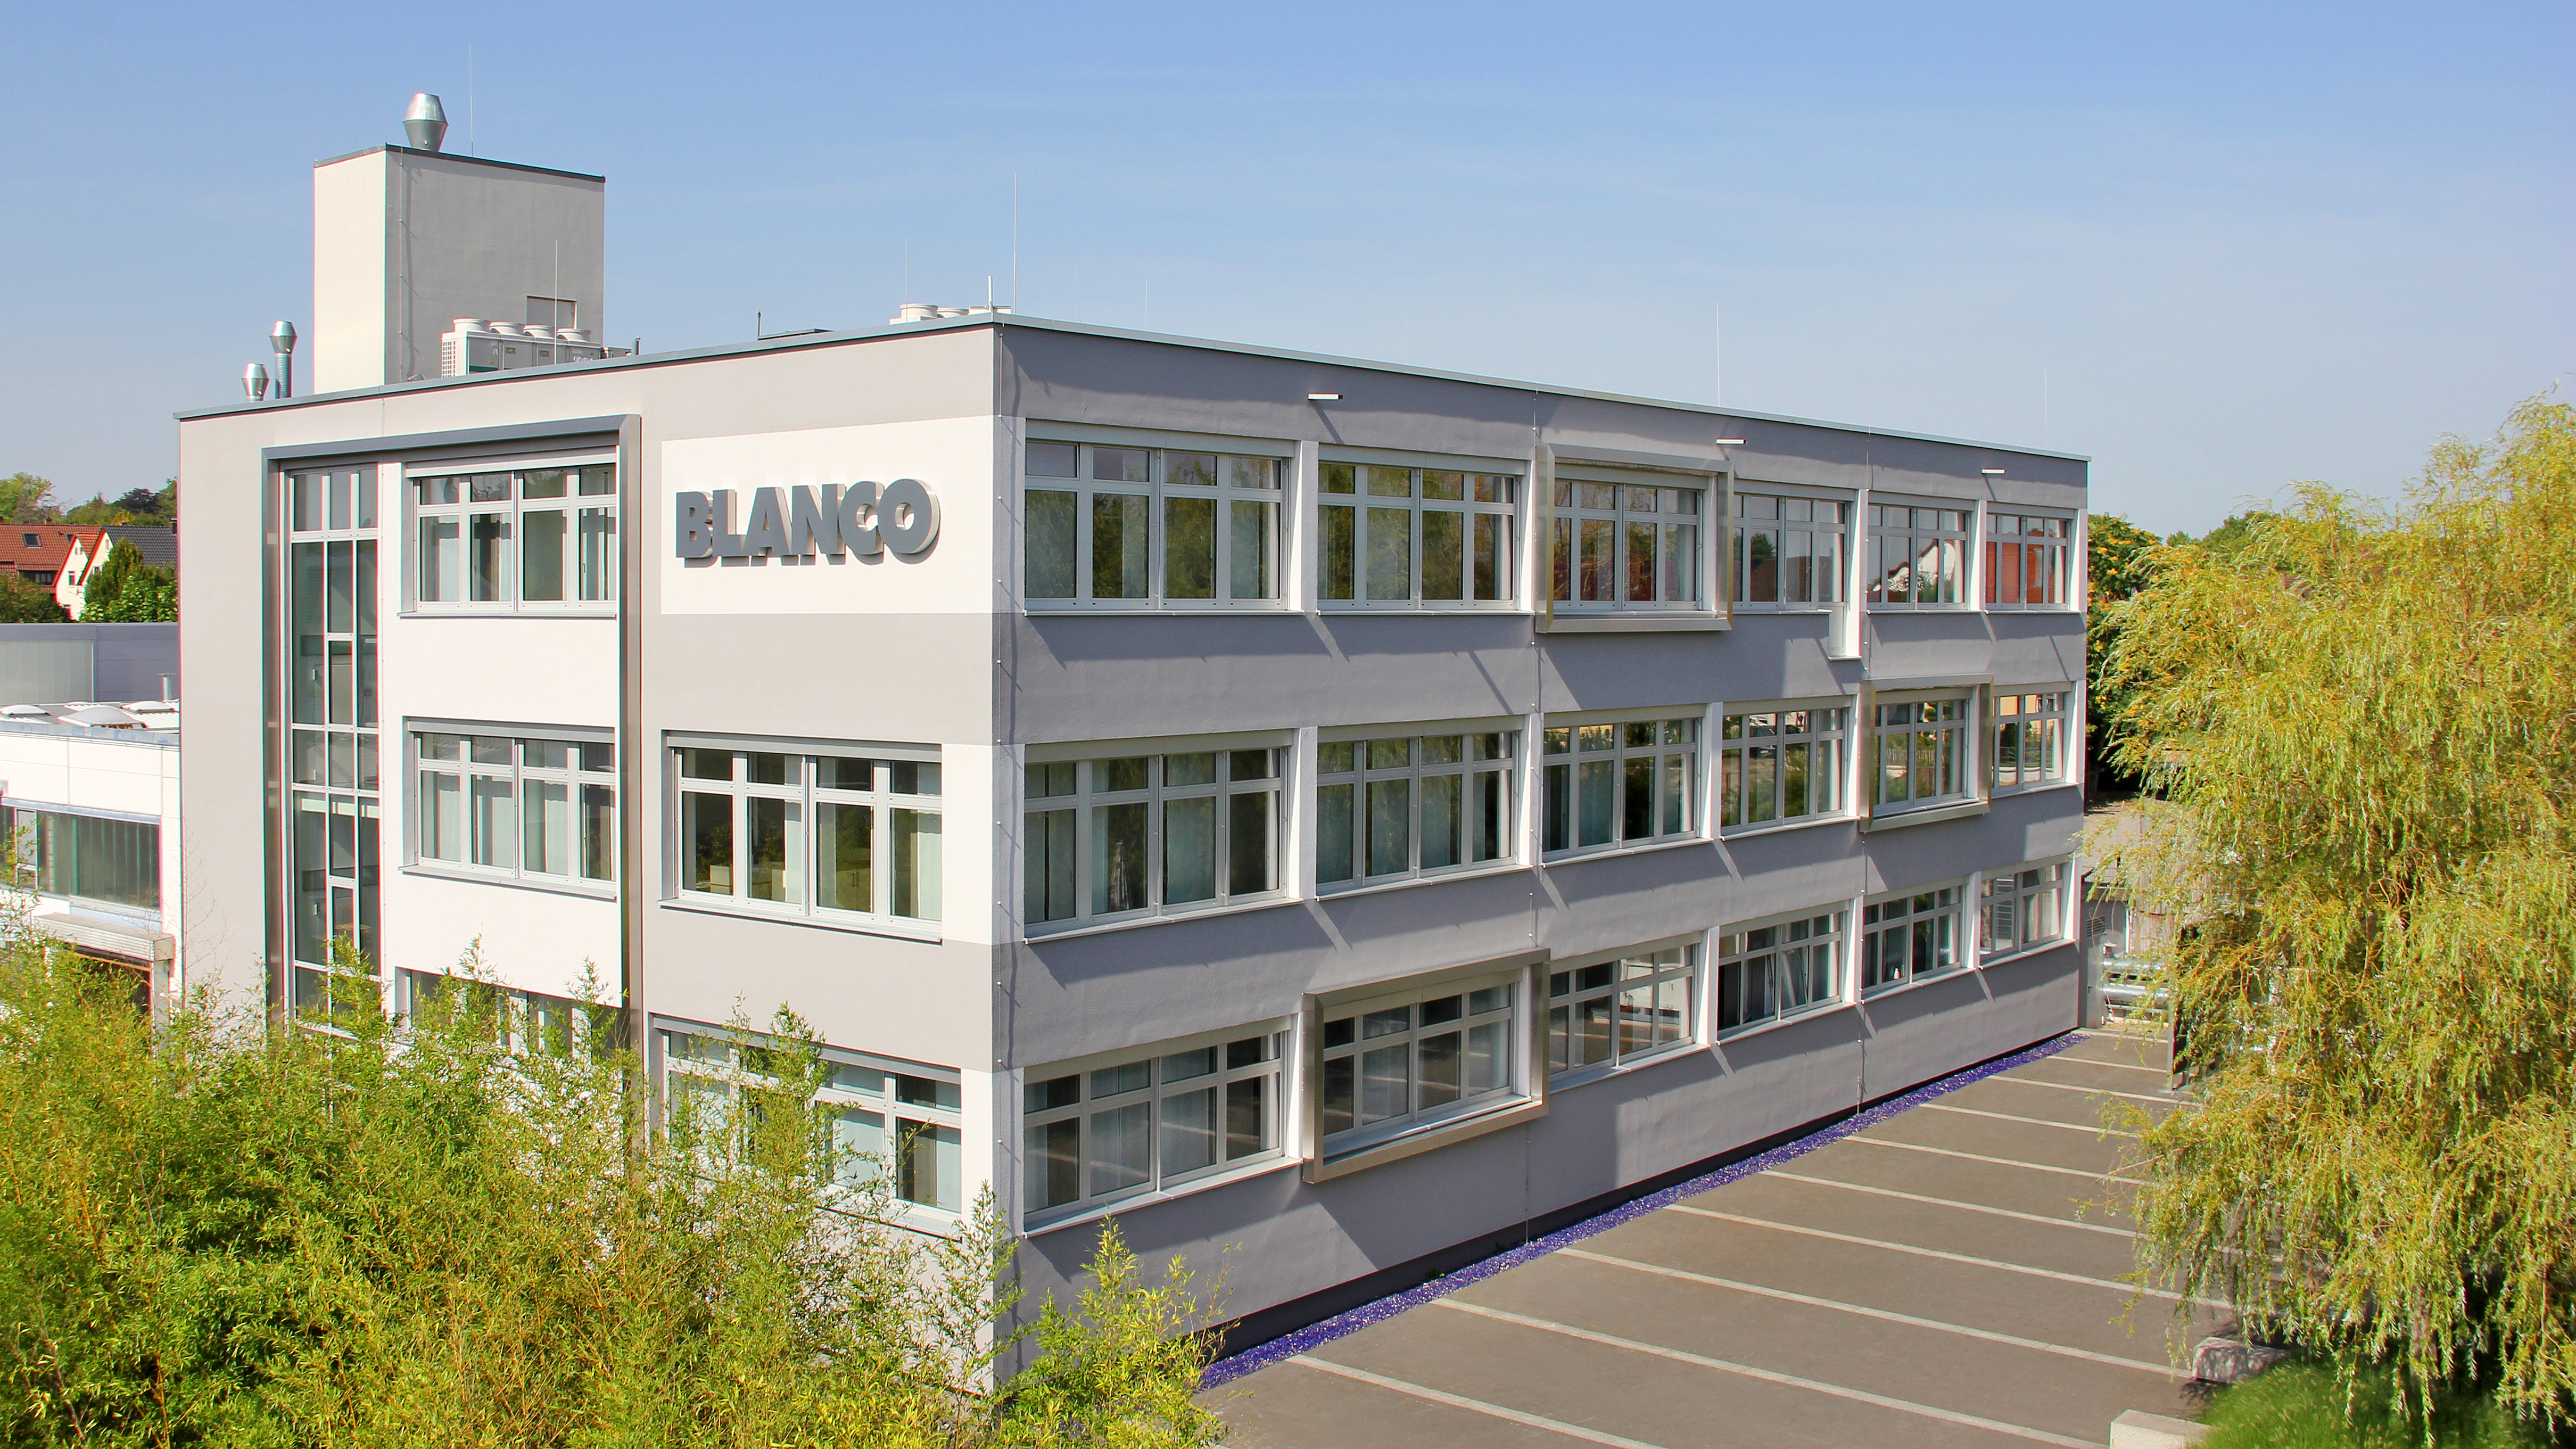 BLANCO UNIT Innovations Center